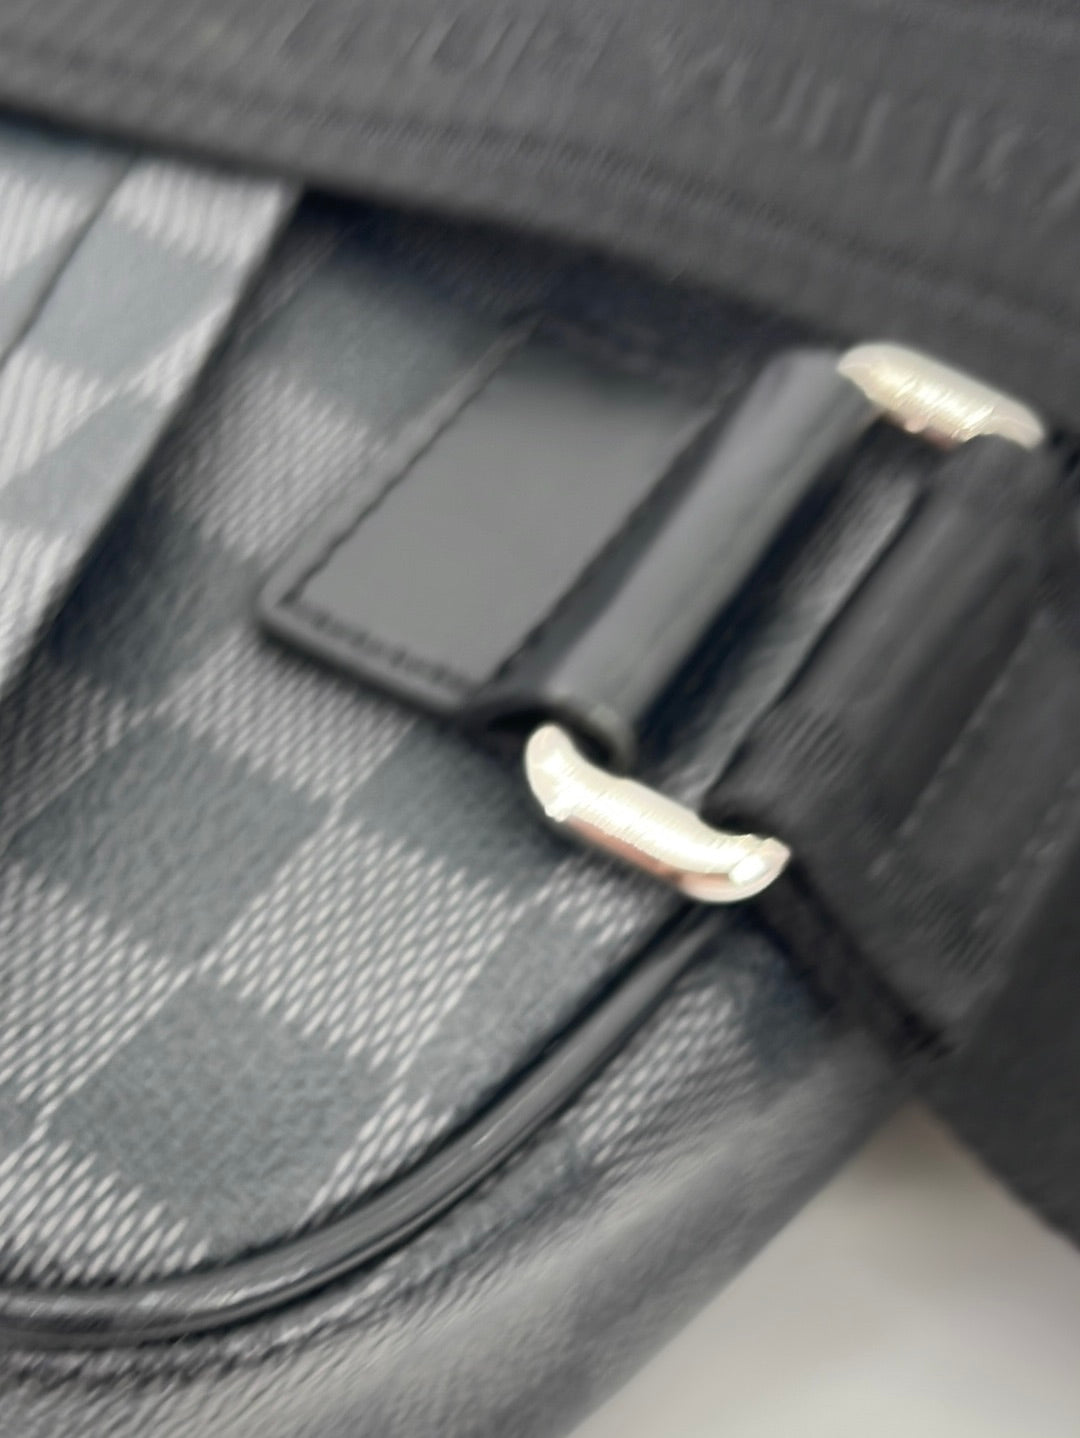 Black Louis Vuitton Damier Graphite Trocadero PM Crossbody Bag